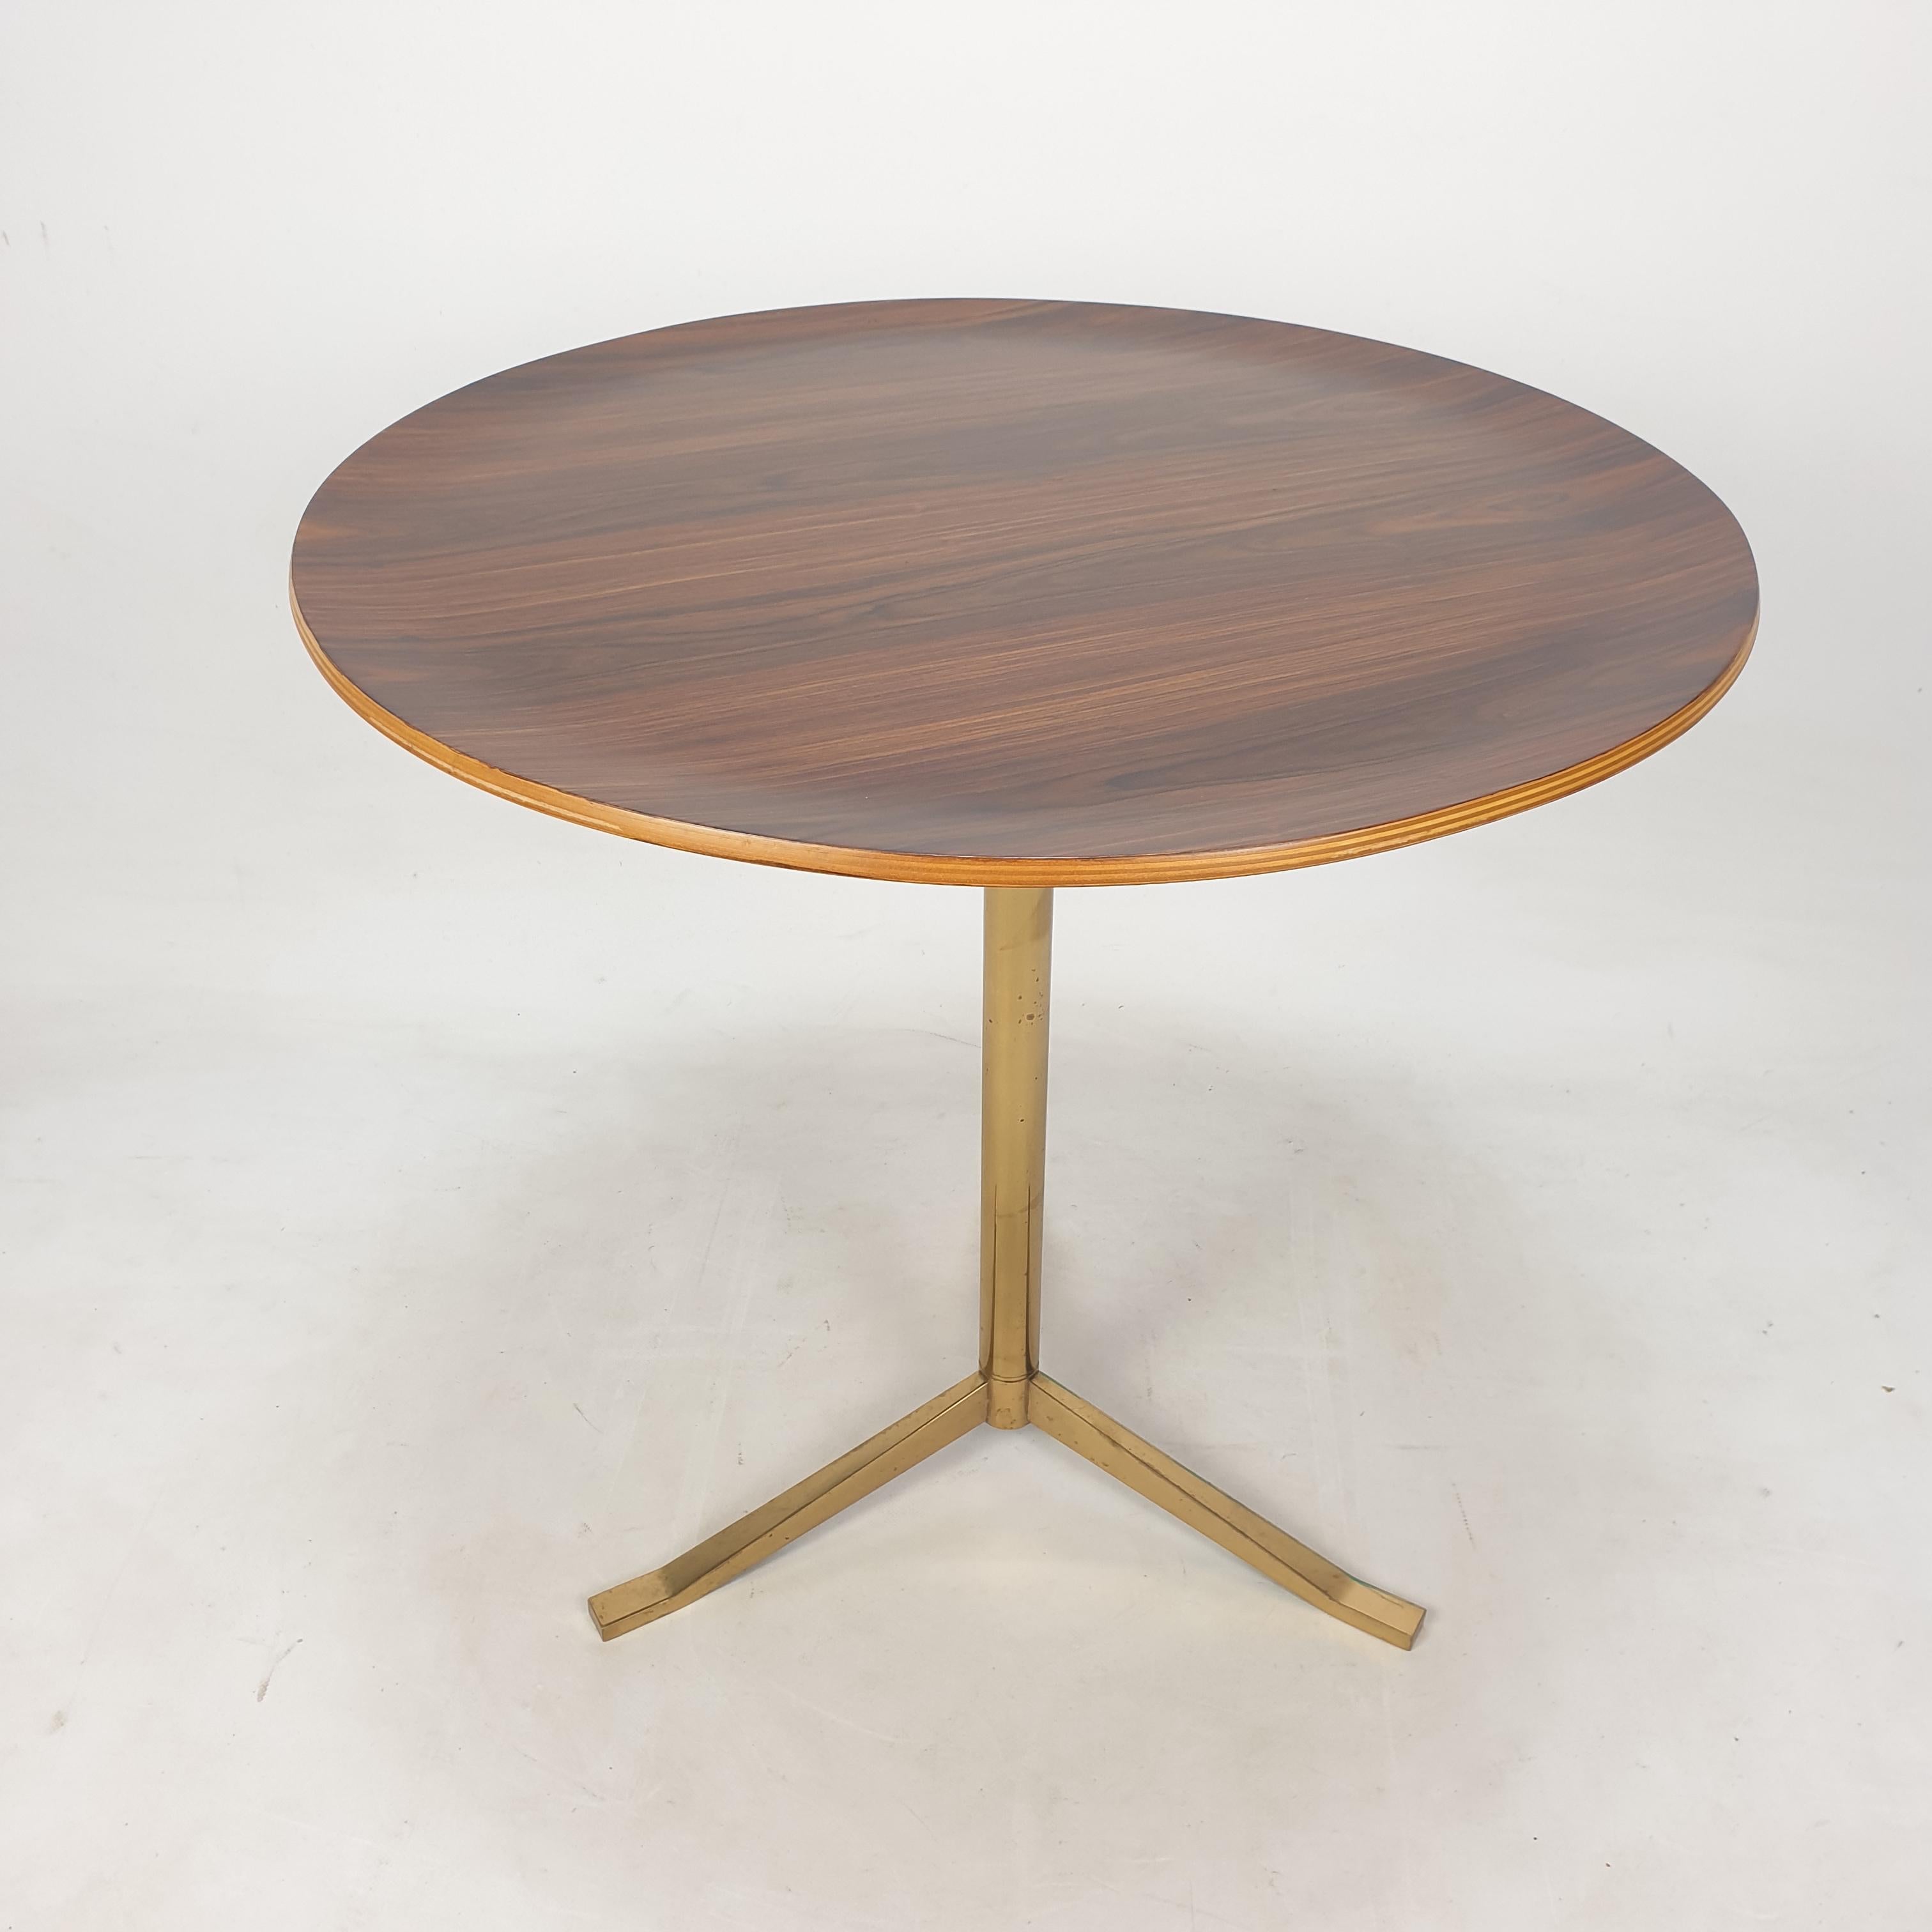 Rare coffee table designed by Osvaldo Borsani and produced by Arredamenti Borsani, Varedo, 1950s.

Beautiful shaped brass leg with a round walnut wooden plate.